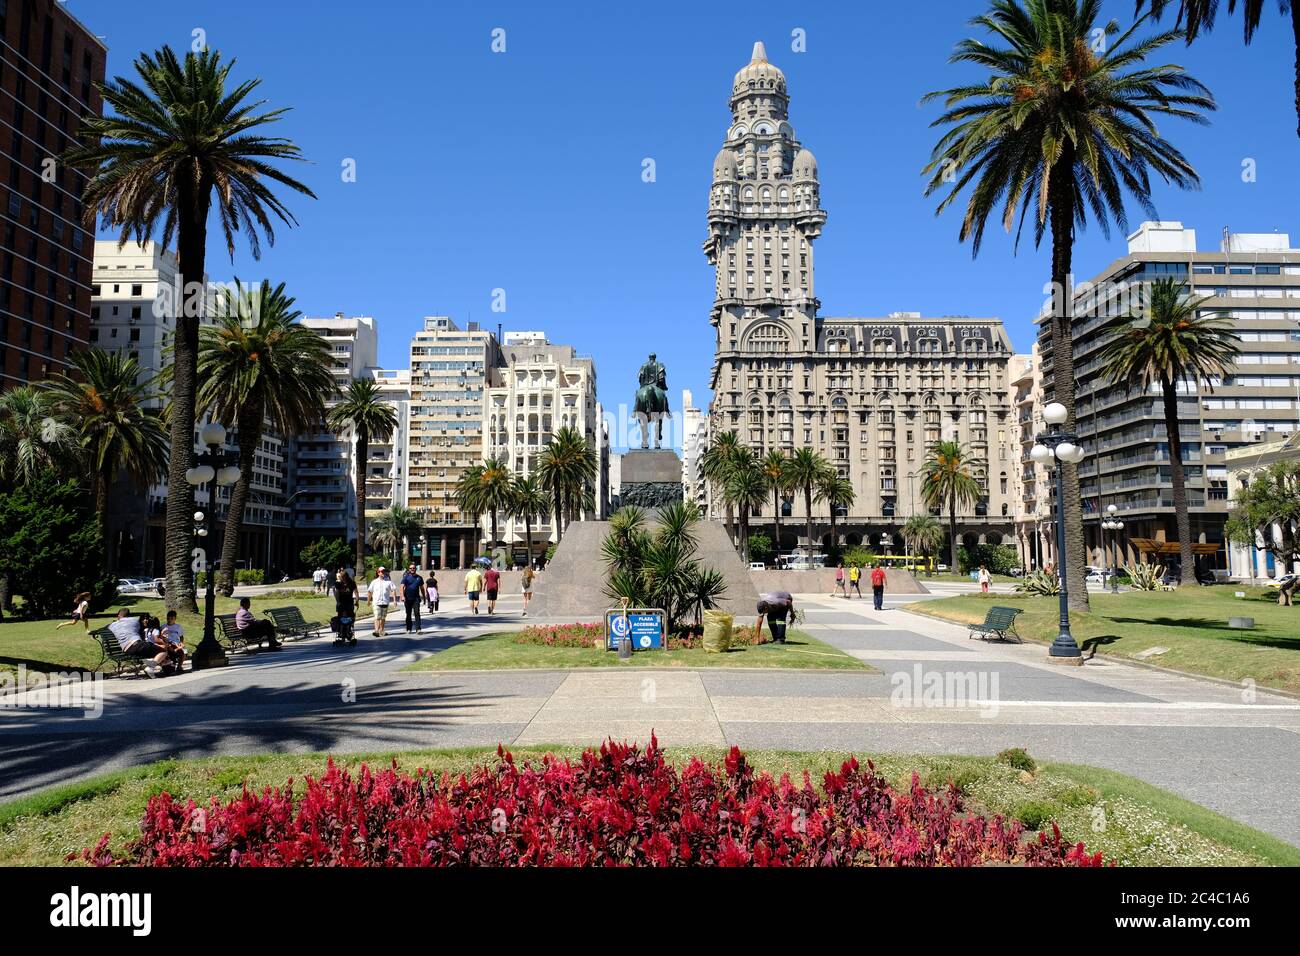 Uruguay Montevideo - Plaza Independencia - Independence Square Stock Photo